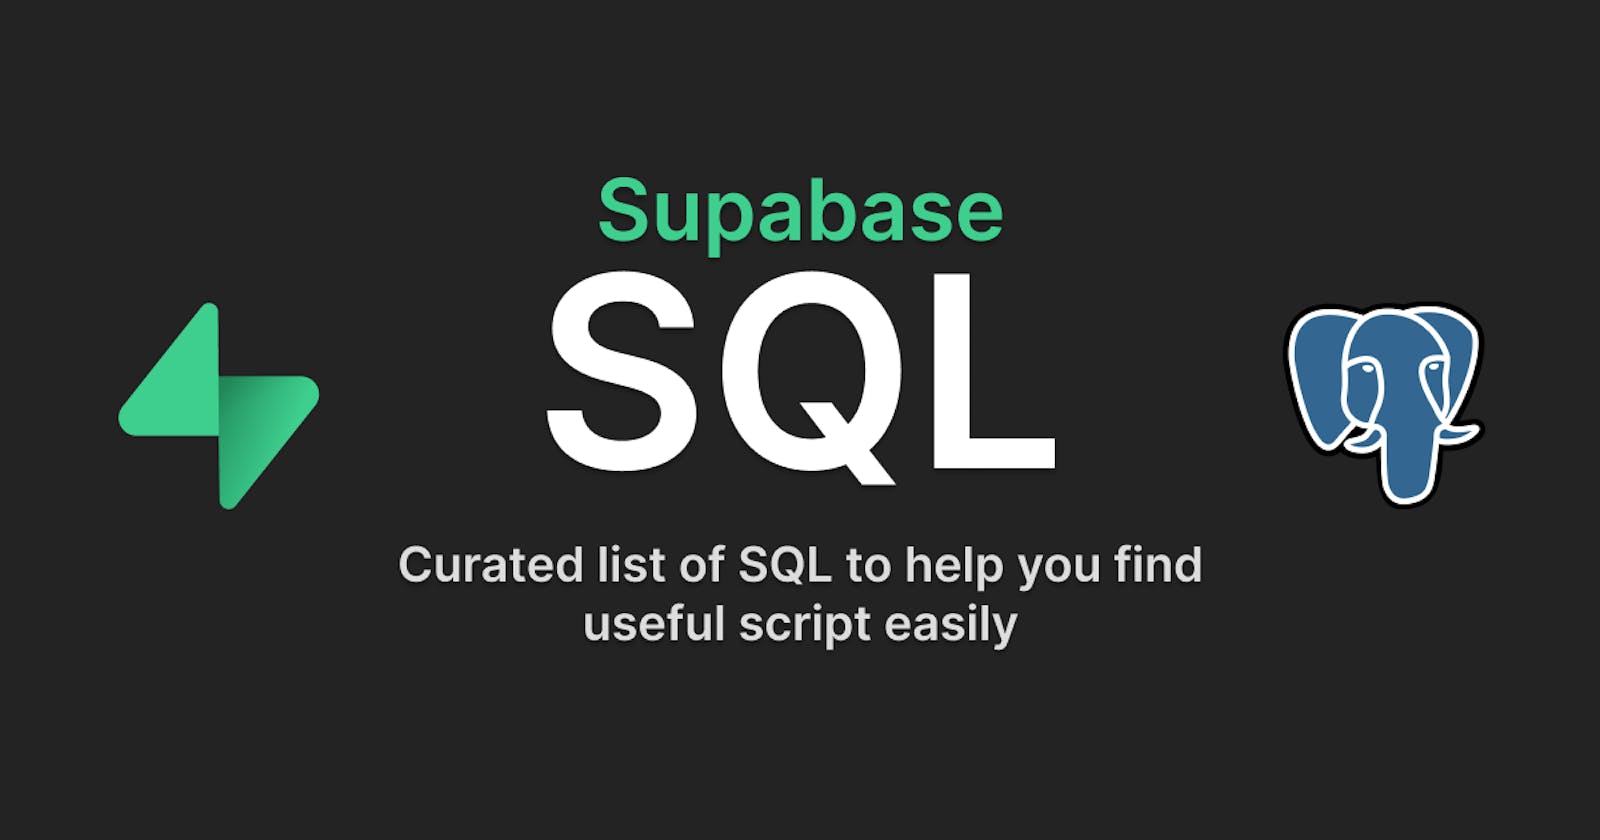 Supabase/Postgres SQL Cheatsheet - Curated List of SQL